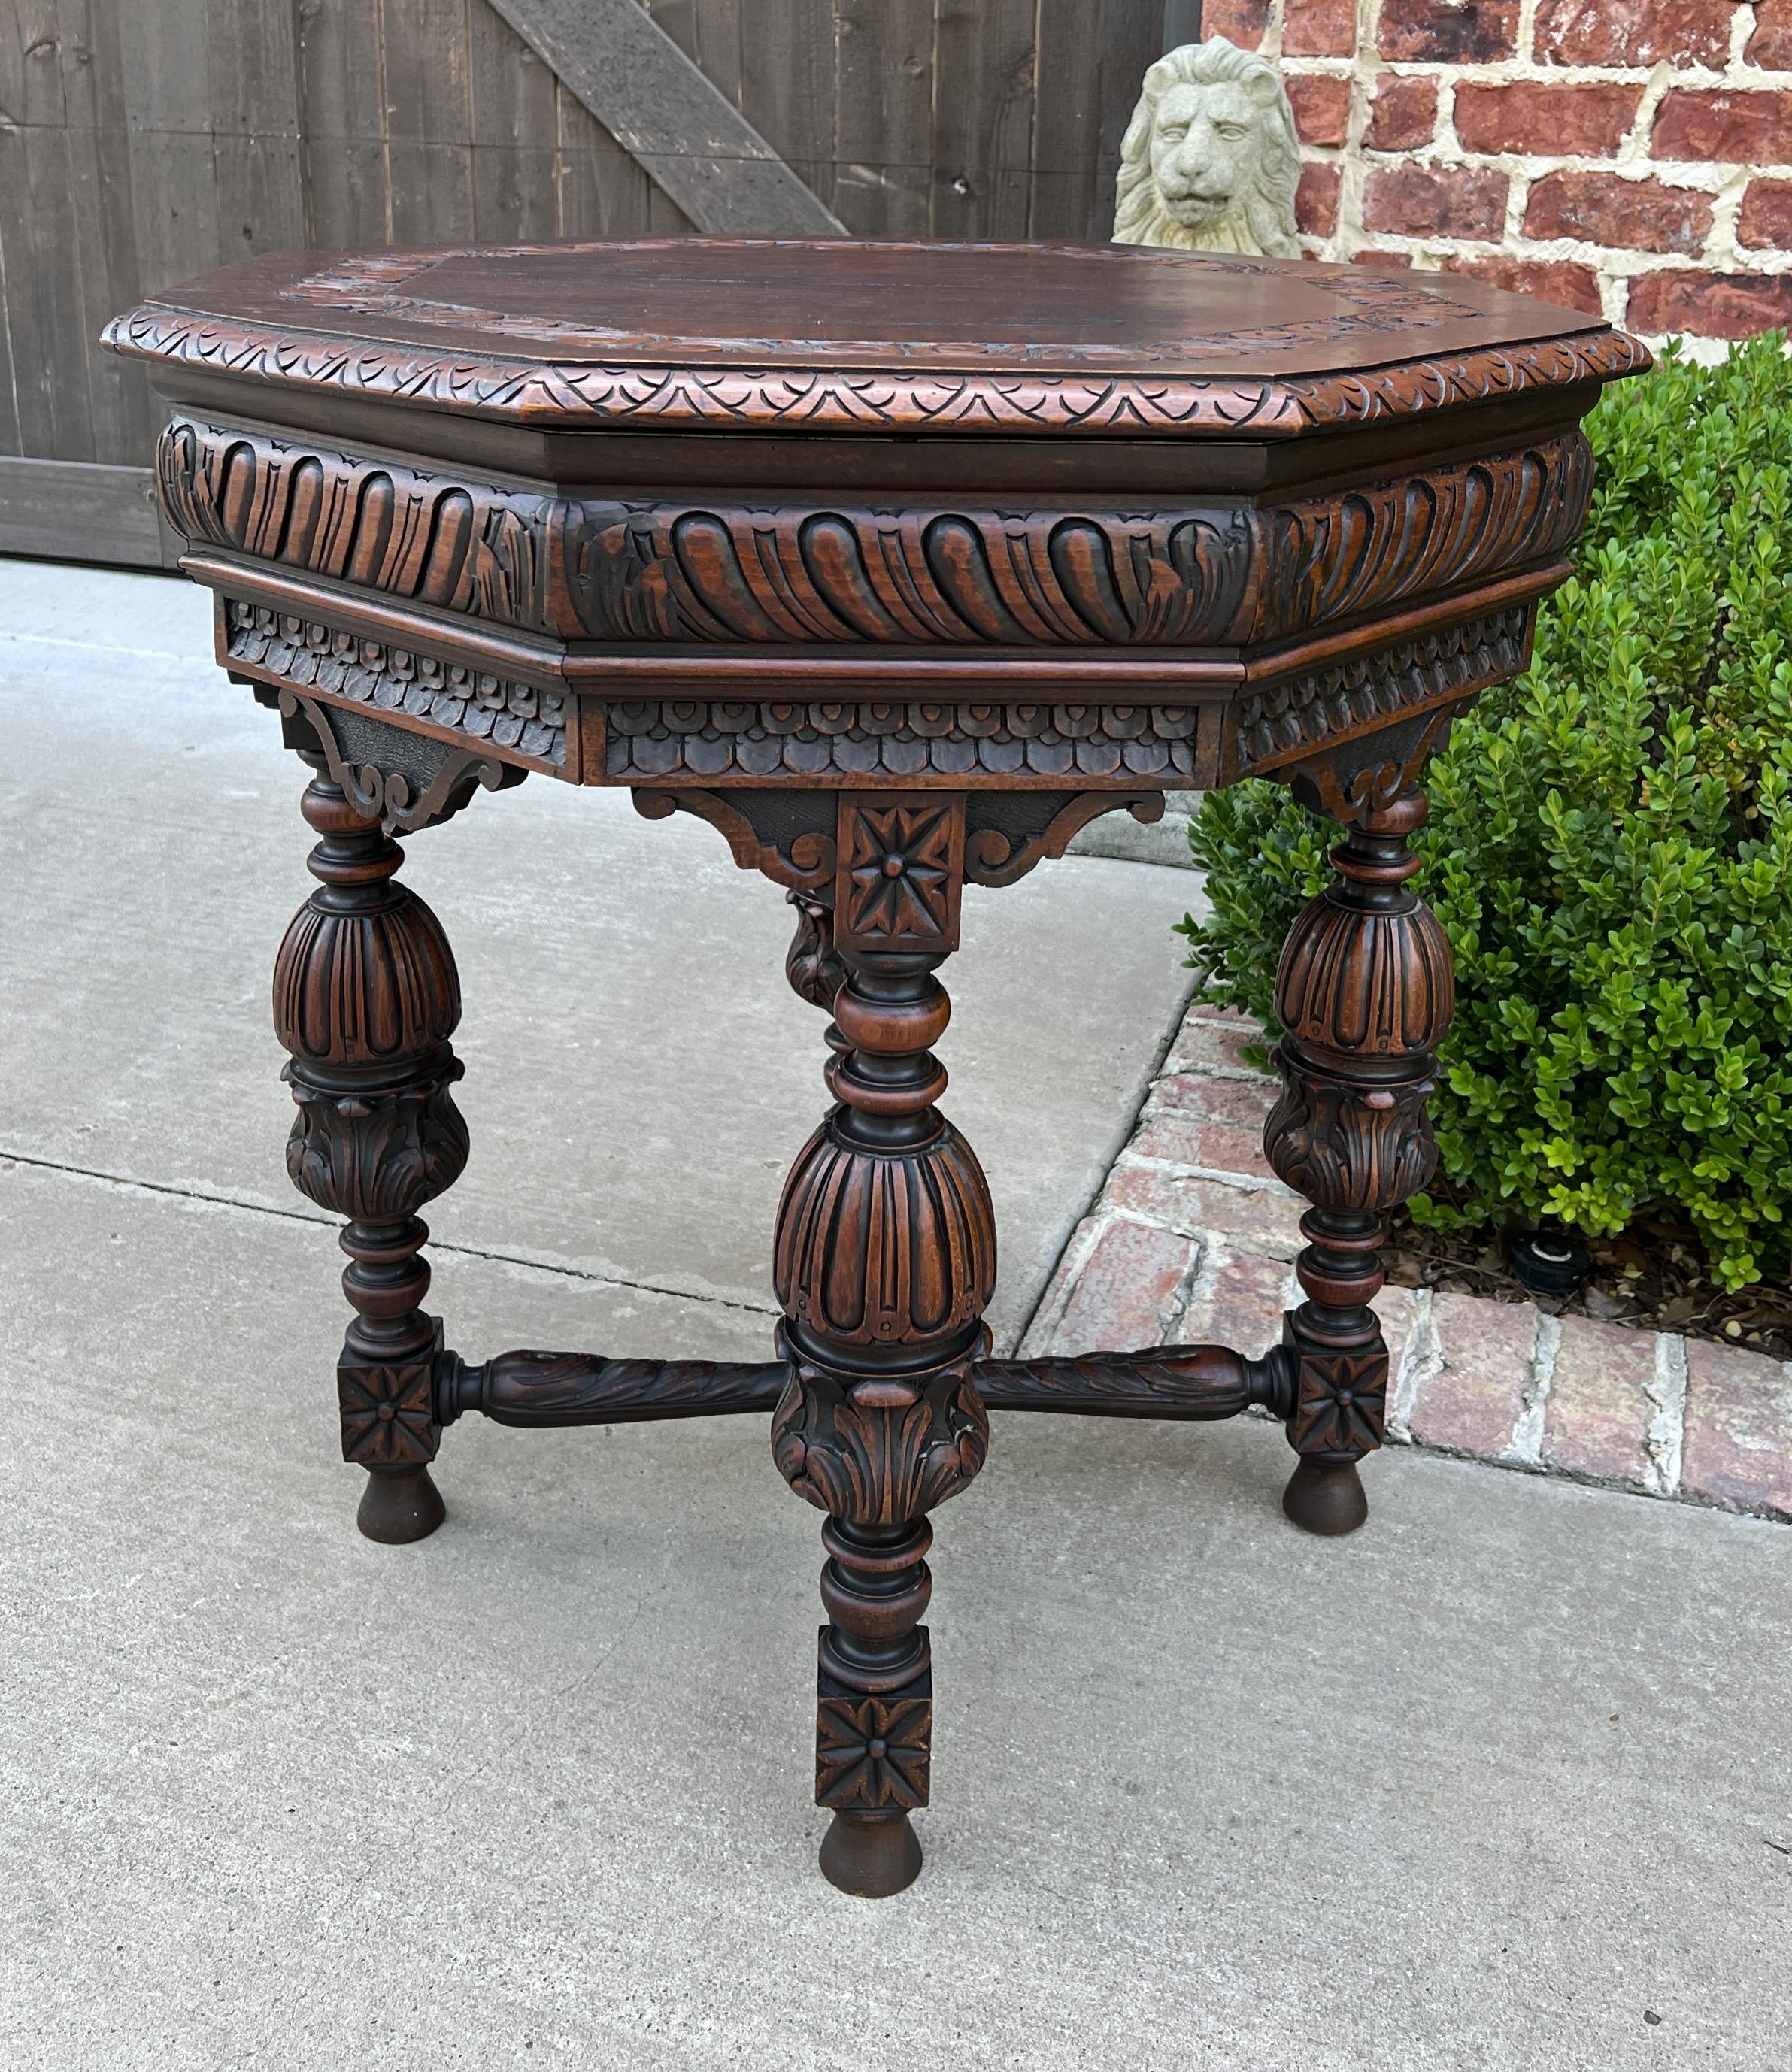 Antique French Table Octagonal Renaissance Revival Carved Oak, 19th Century For Sale 9